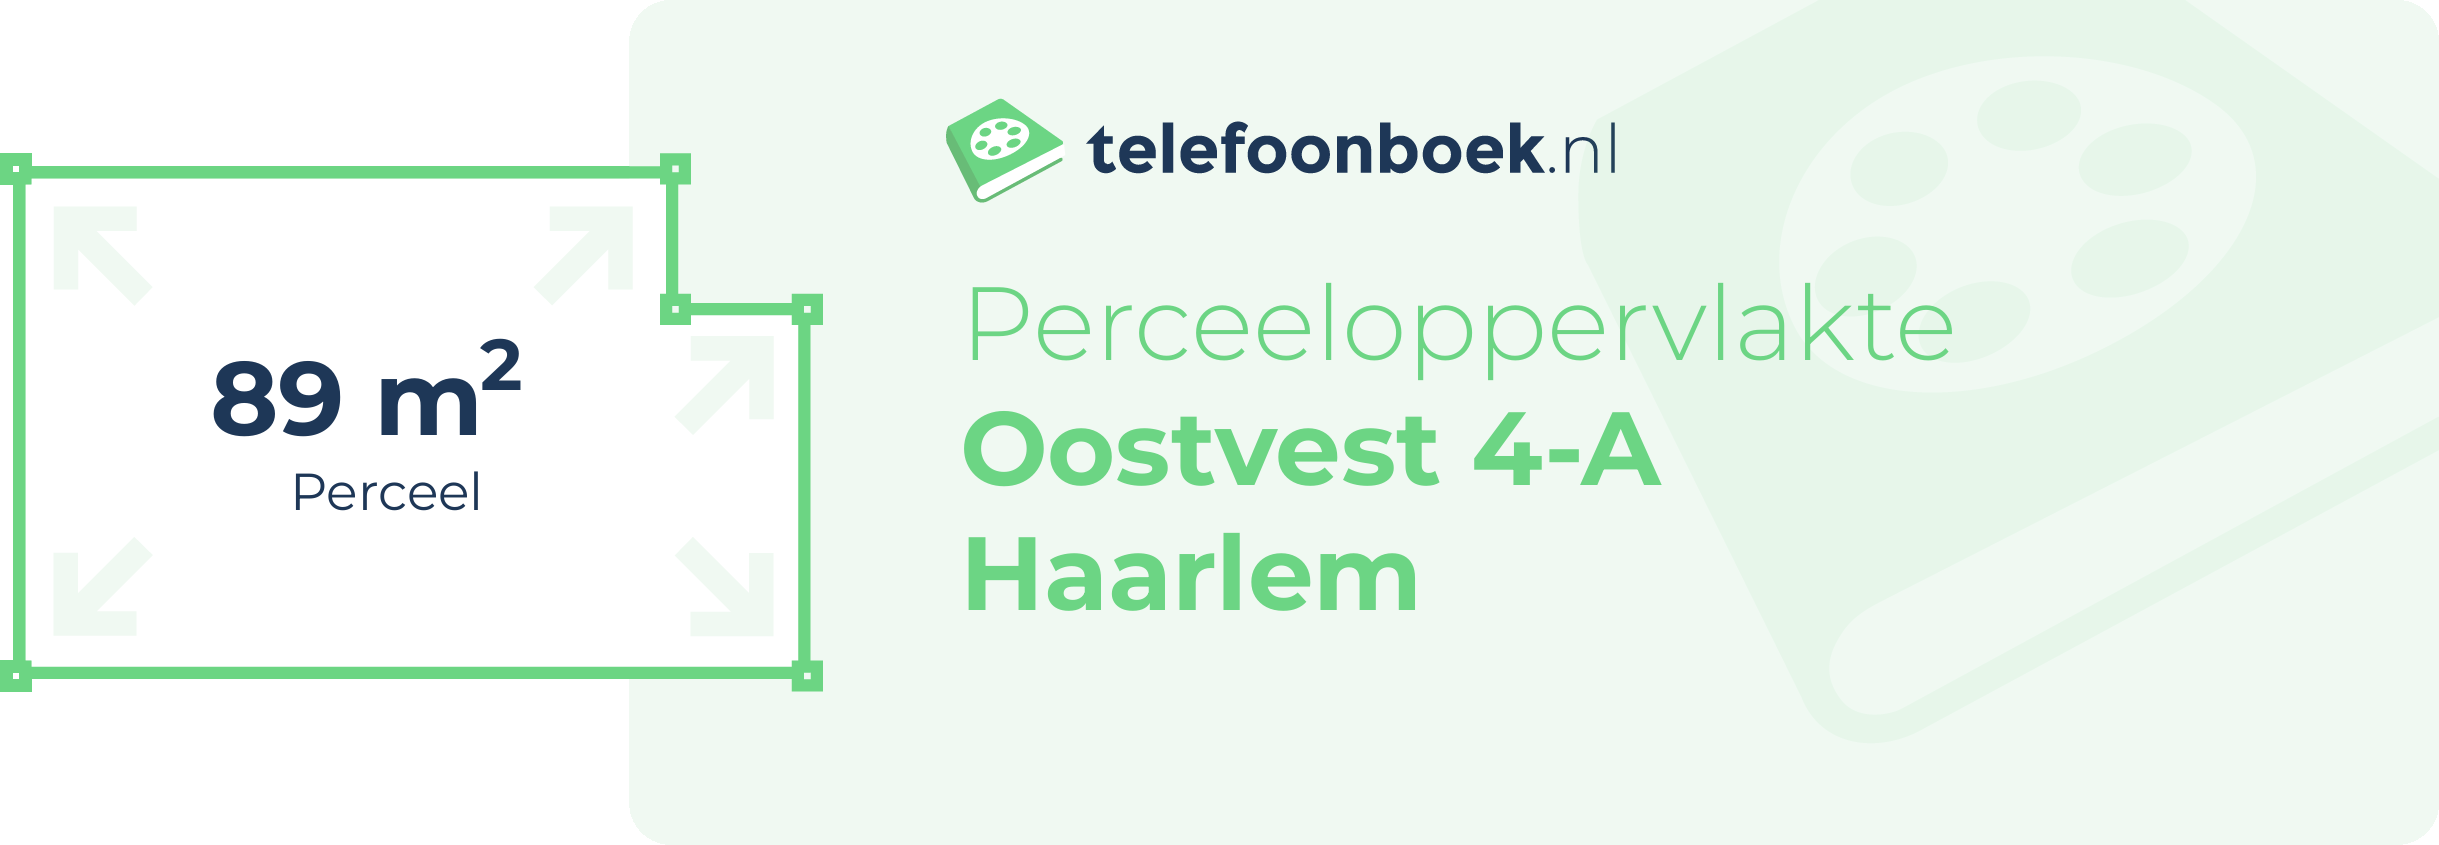 Perceeloppervlakte Oostvest 4-A Haarlem